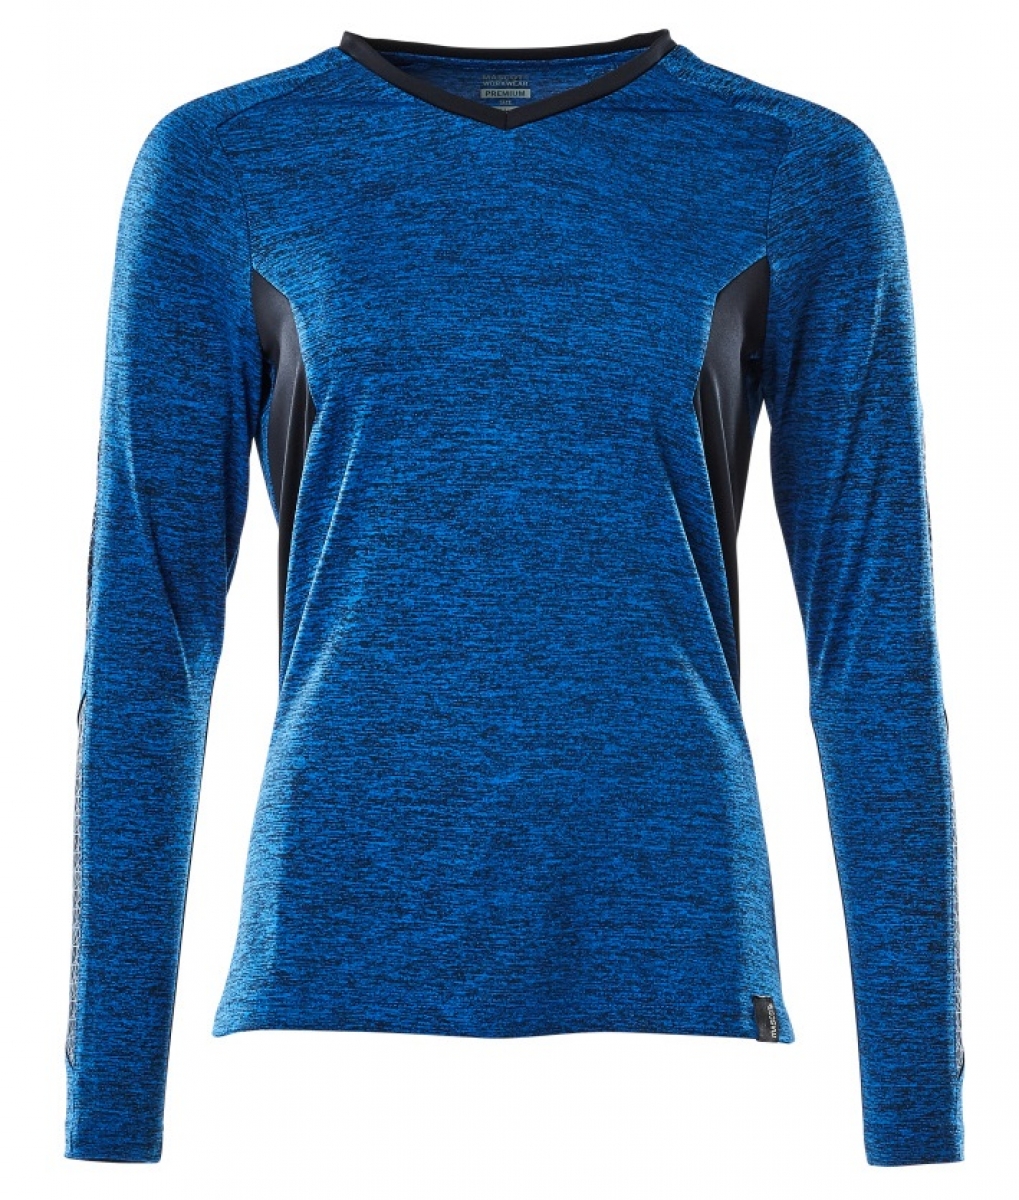 MASCOT-Worker-Shirts, Damen-T-Shirt, langarm, 230 g/m, azurblau/schwarzblau